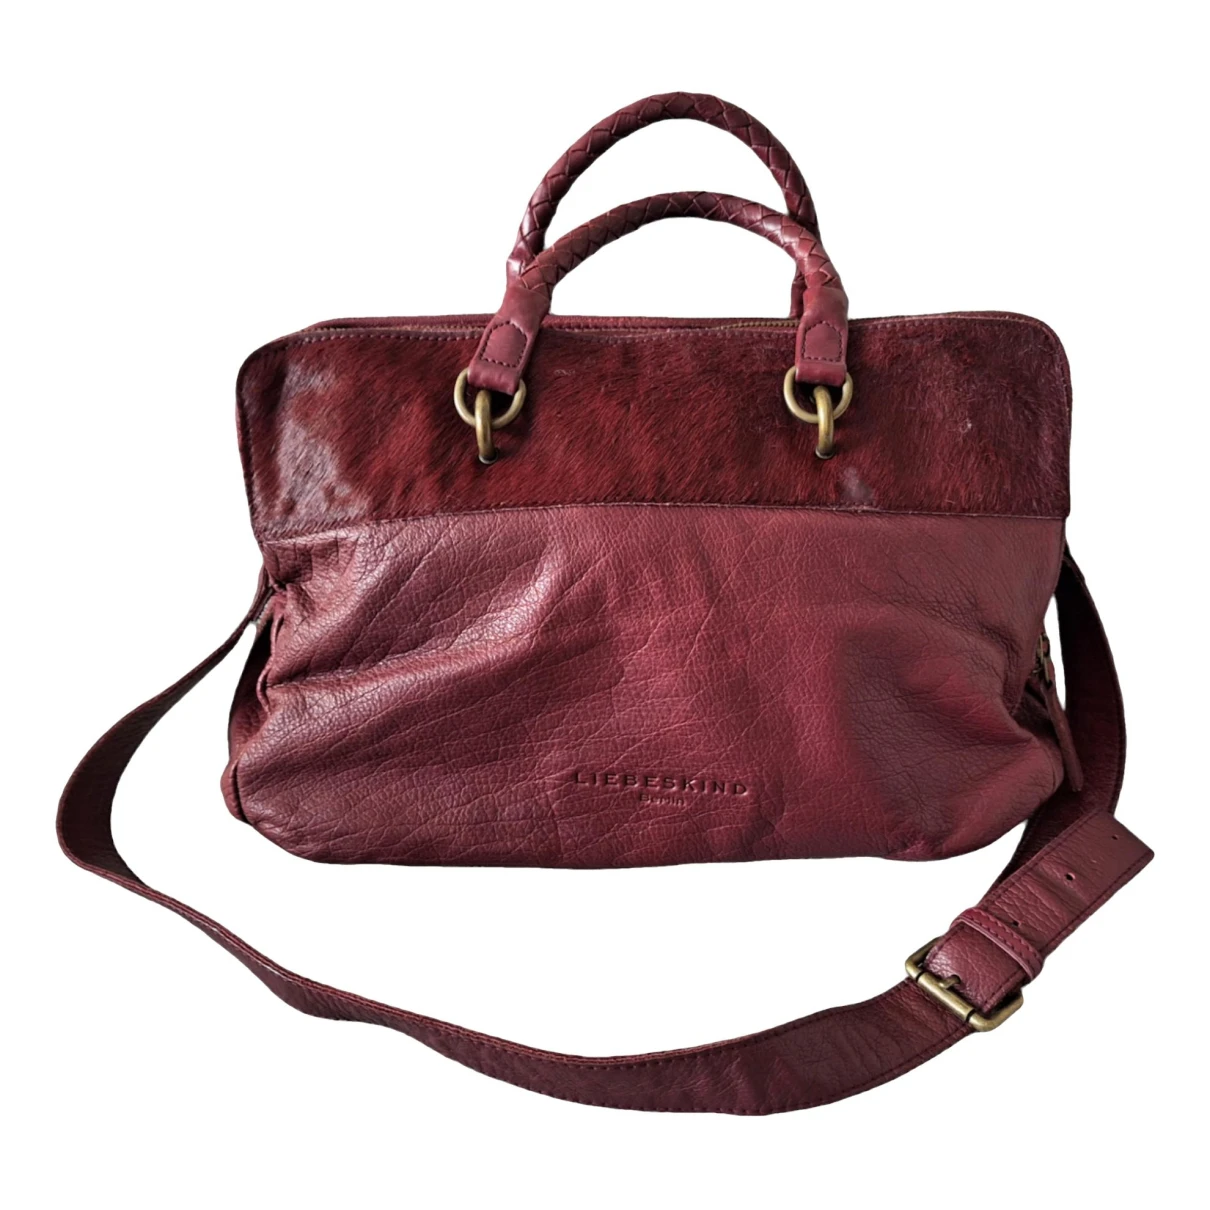 Pre-owned Liebeskind Leather Handbag In Burgundy